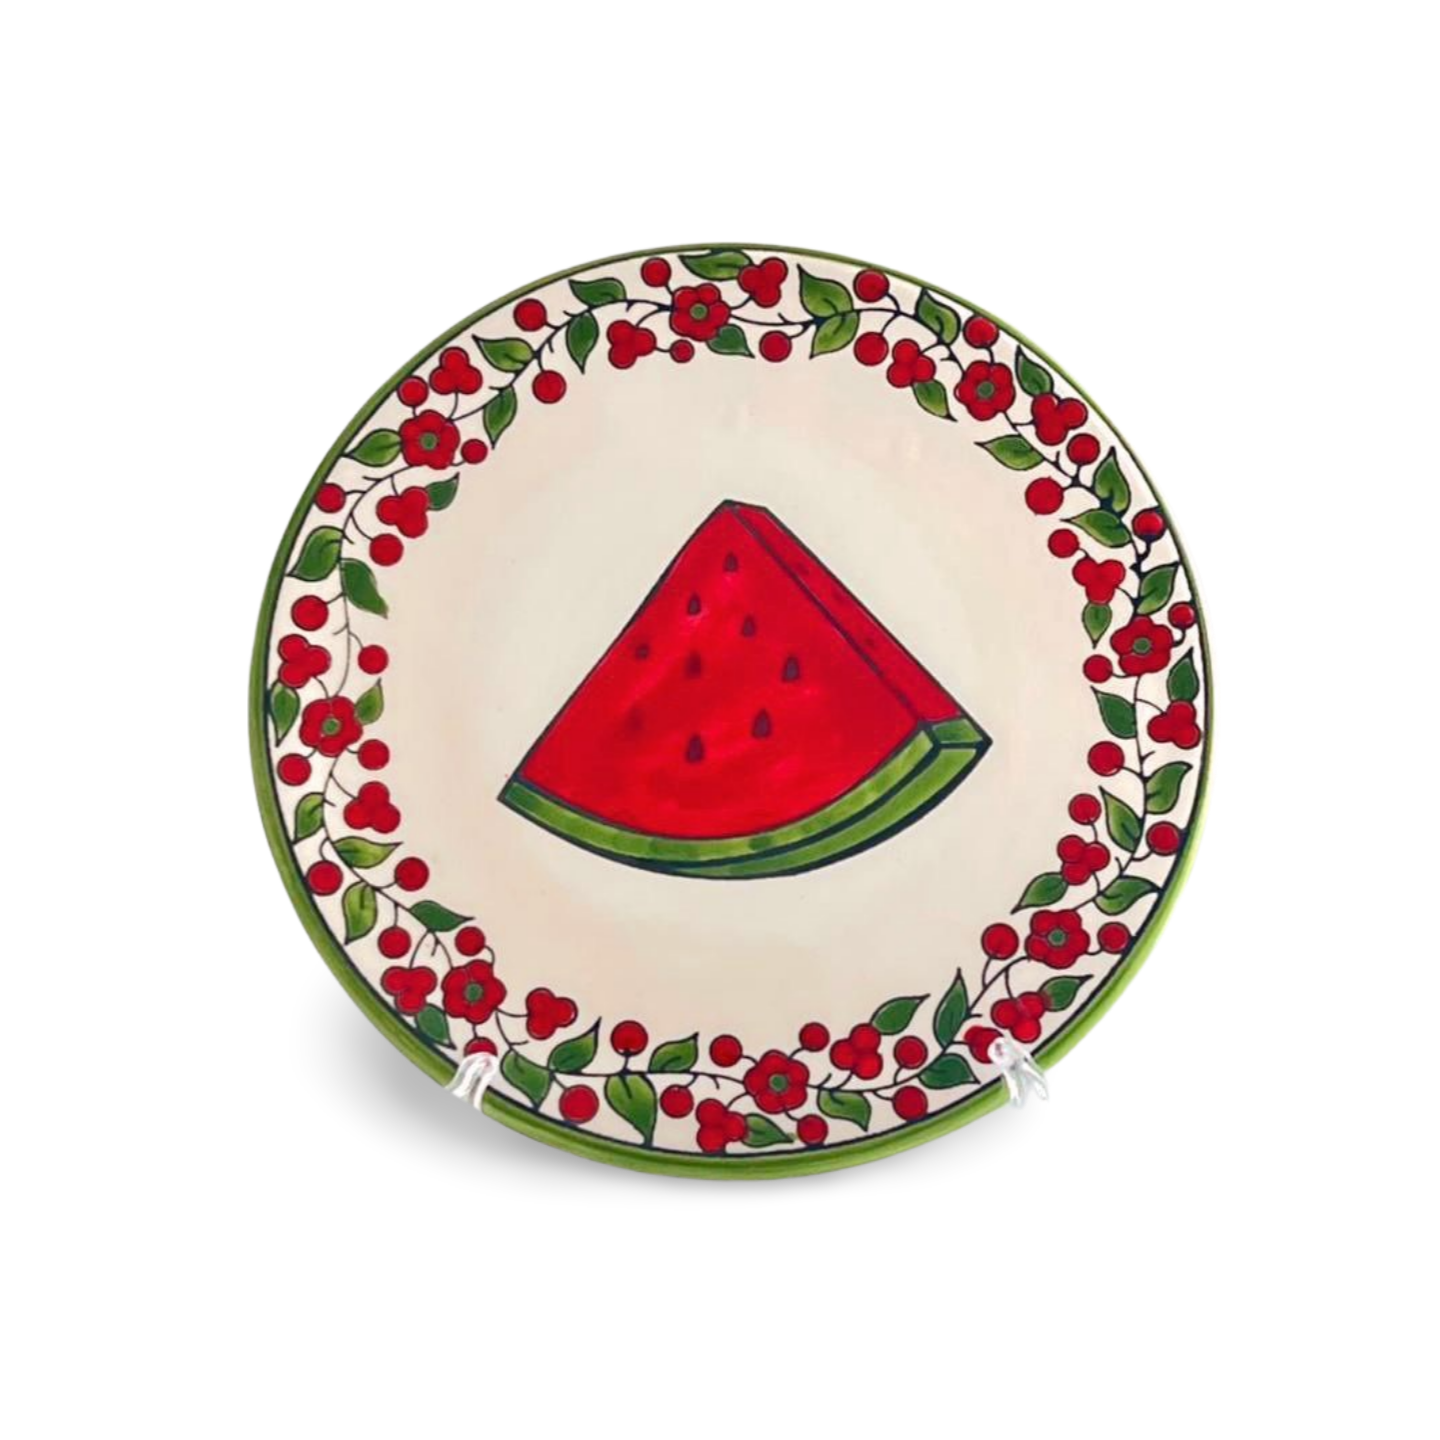 Watermelon display plate